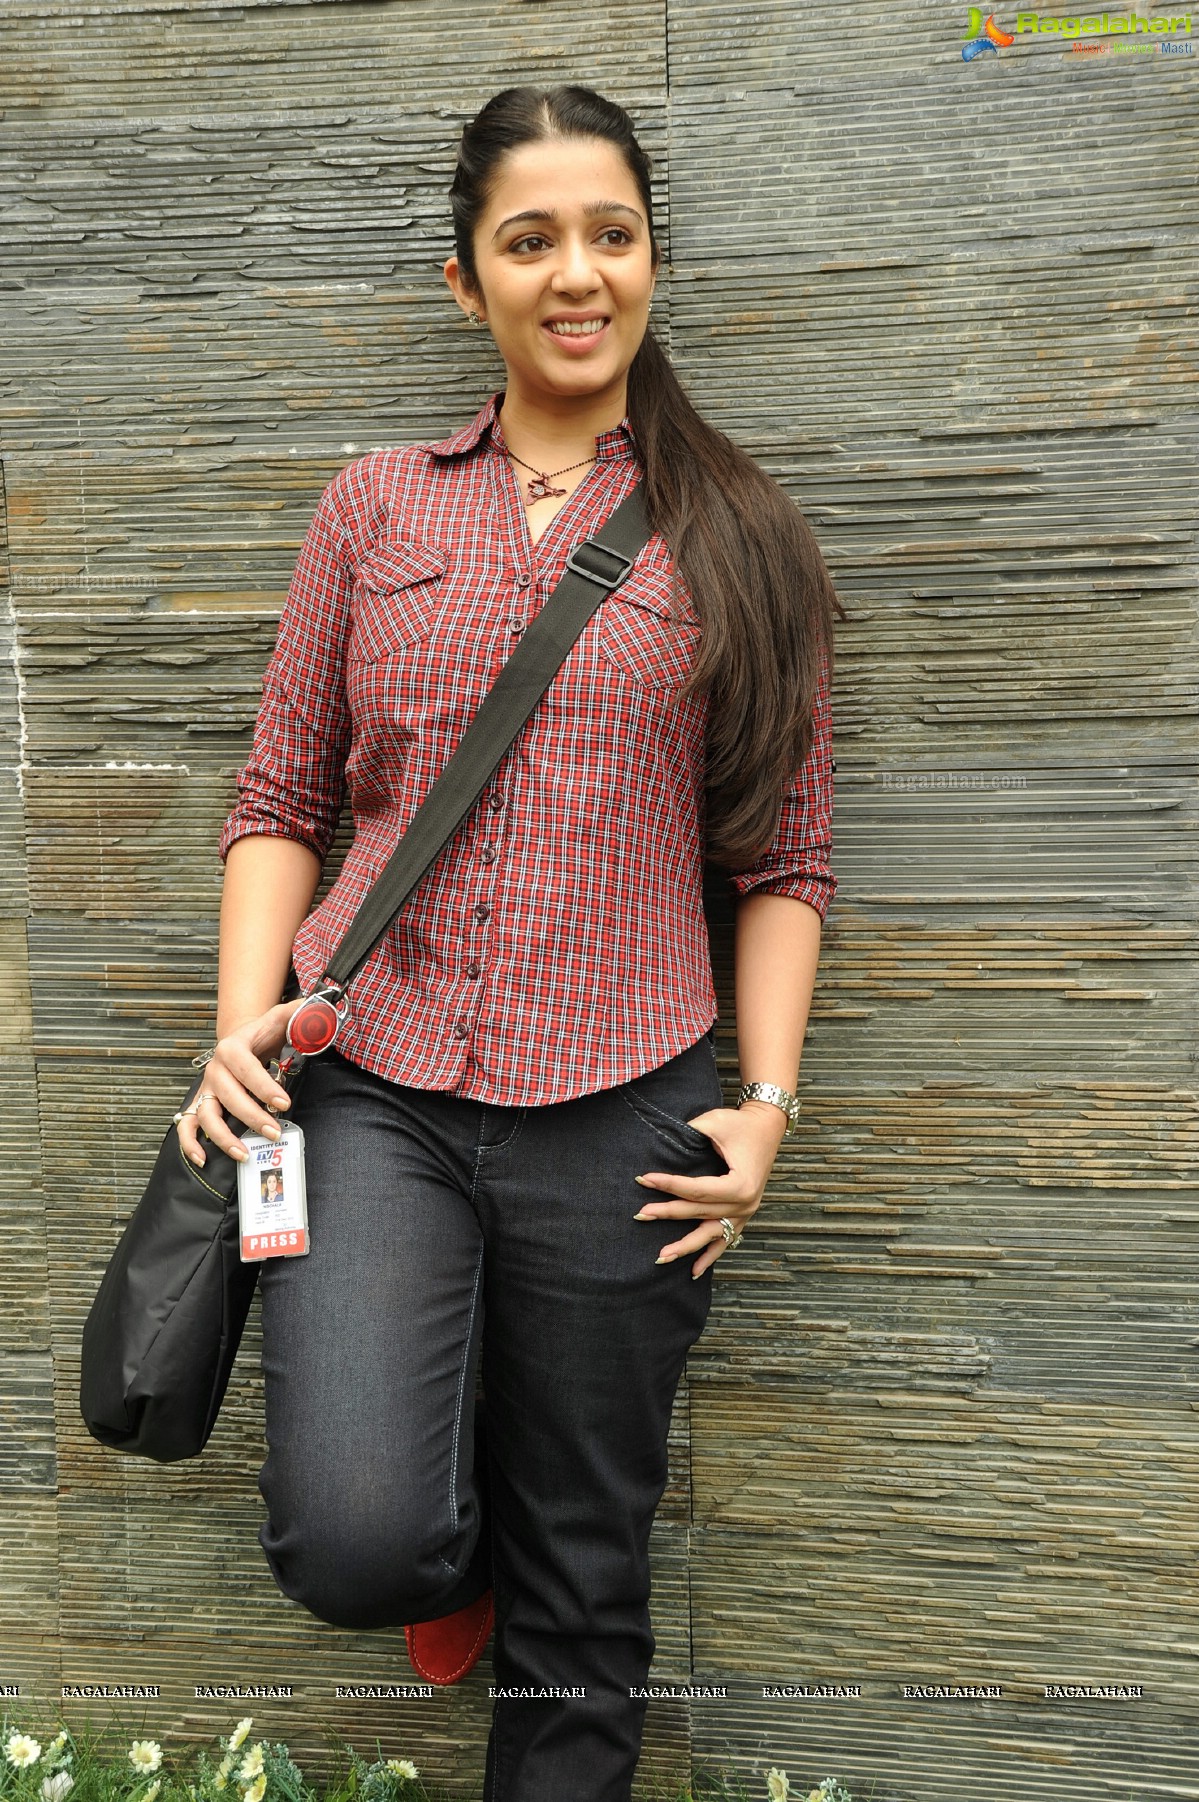 Charmi as TV5 Journalist in Prathighatana, Exclusive Photos